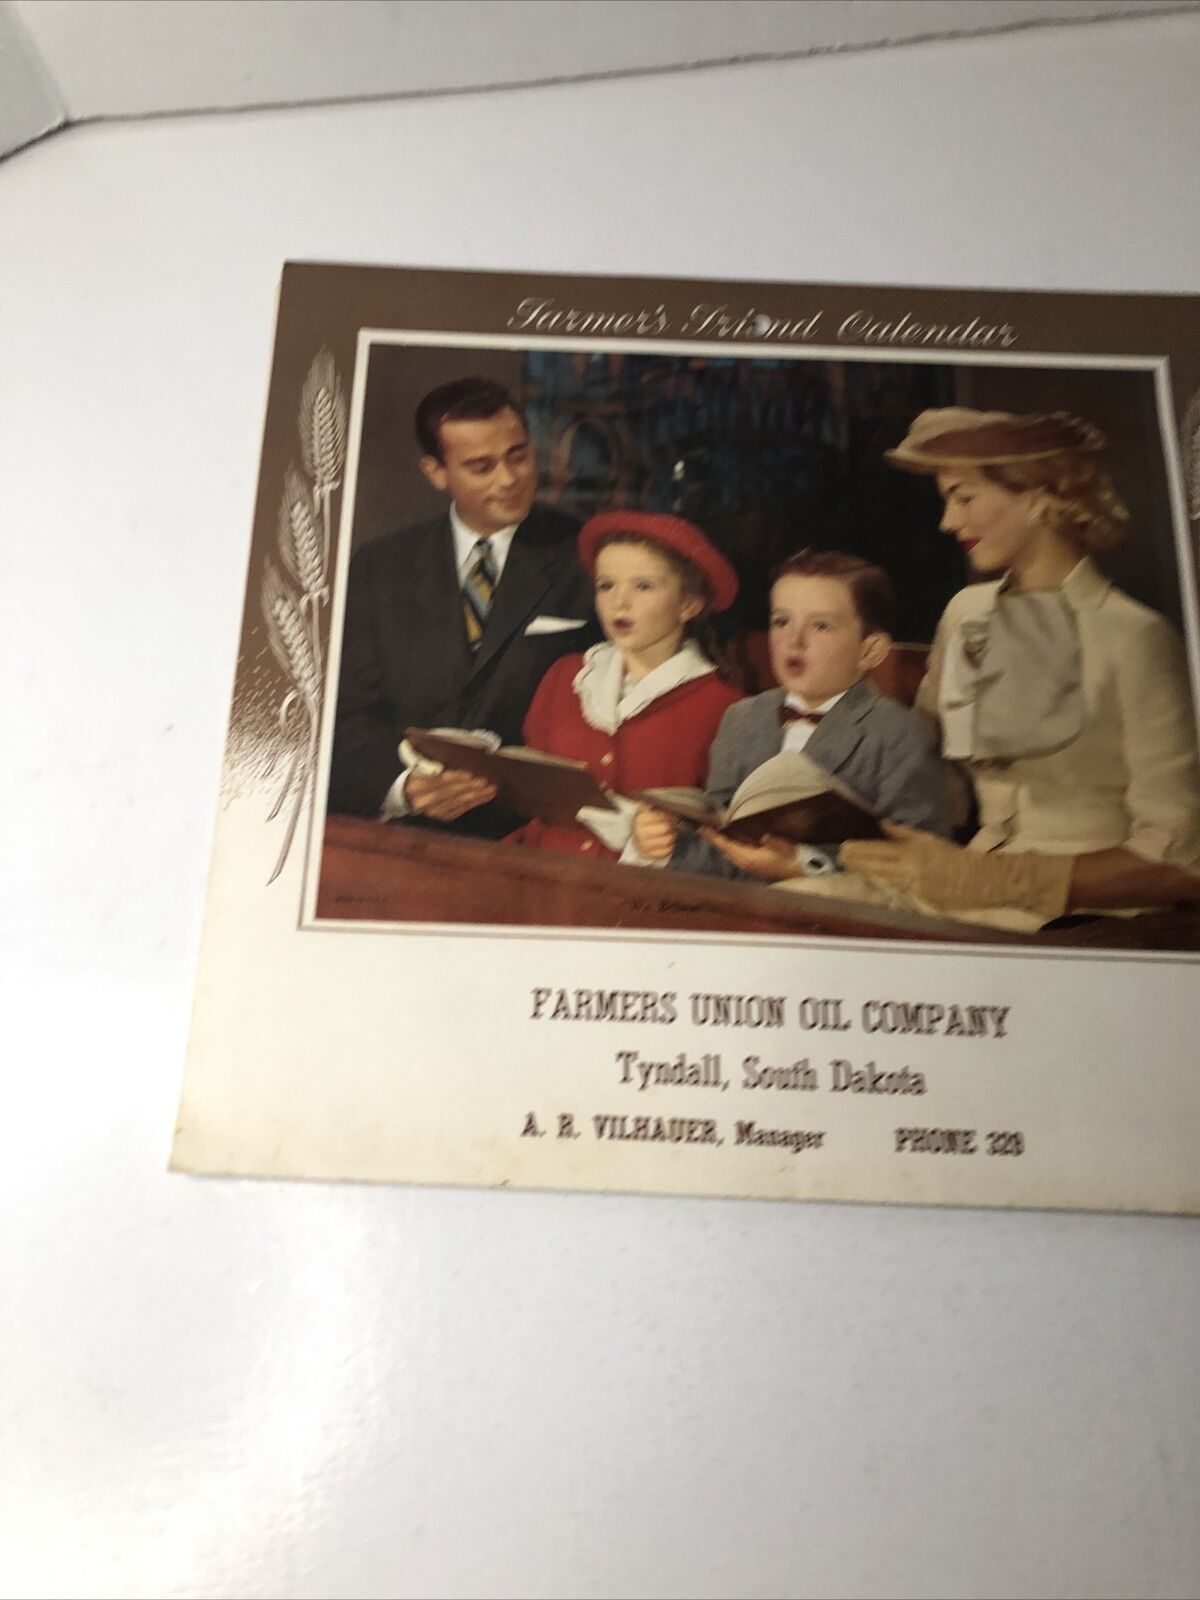 Vintage 1958 Farmers Union Oil Co. Tyndall, South Dakota Farm Record Calendar #3